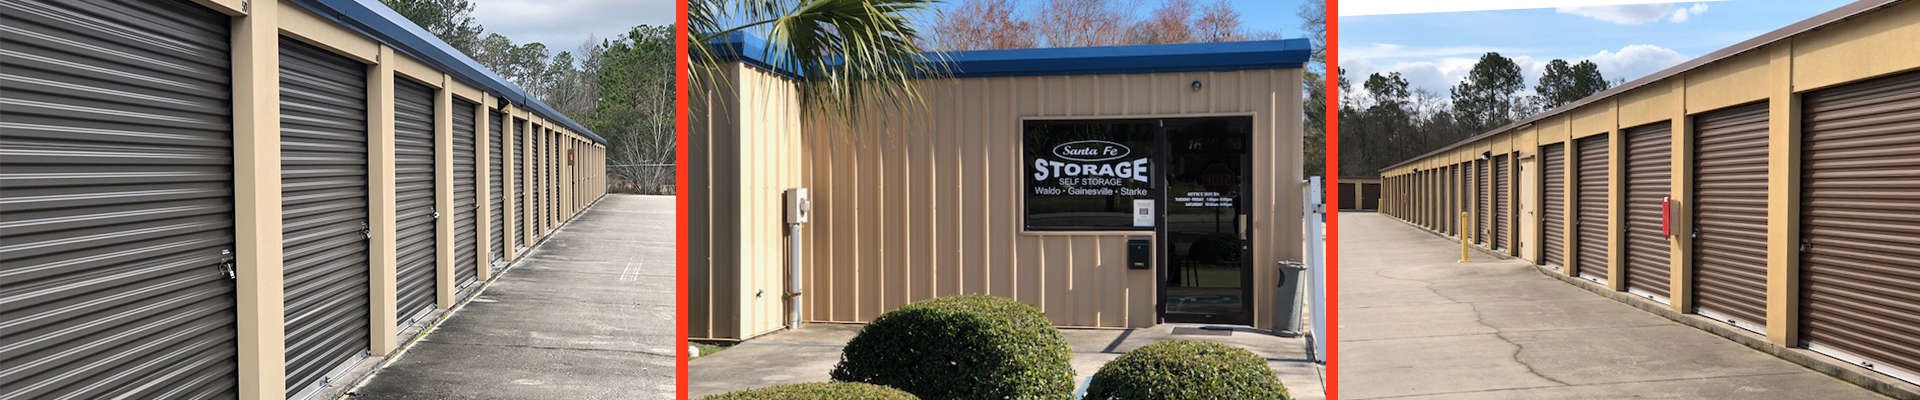 3 convenient locations Santa Fe Self Storage Gainesville (352)373-0004